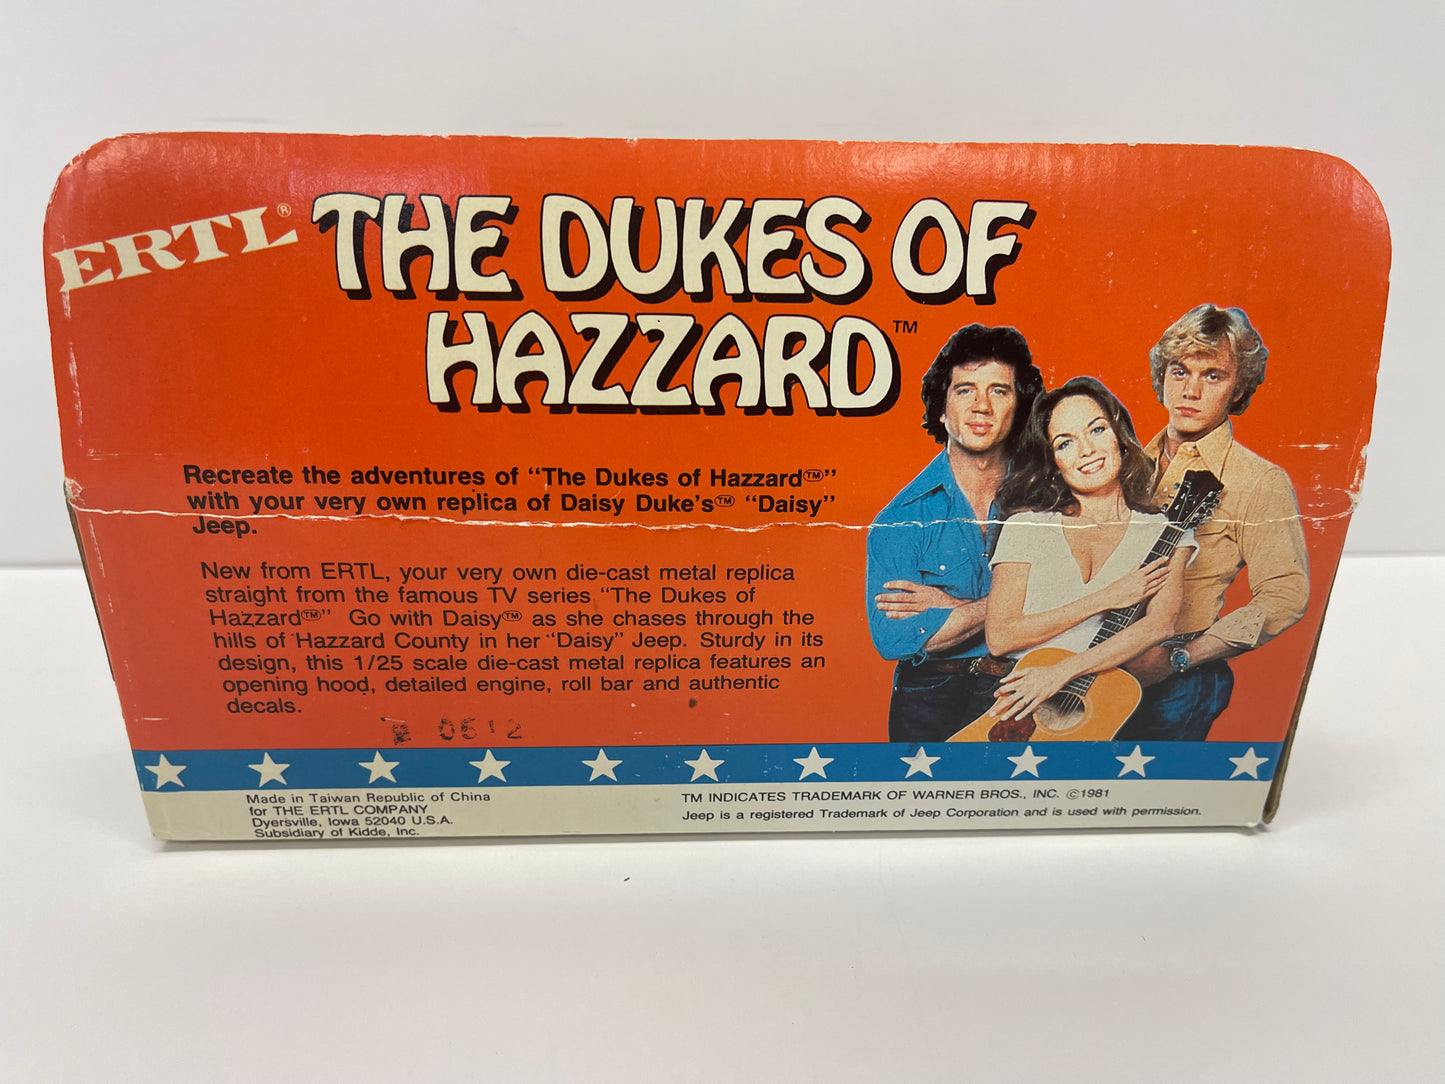 Vintage 1981 Ertl Die Cast The Dukes of Hazzard Daisy’s Jeep 1:25